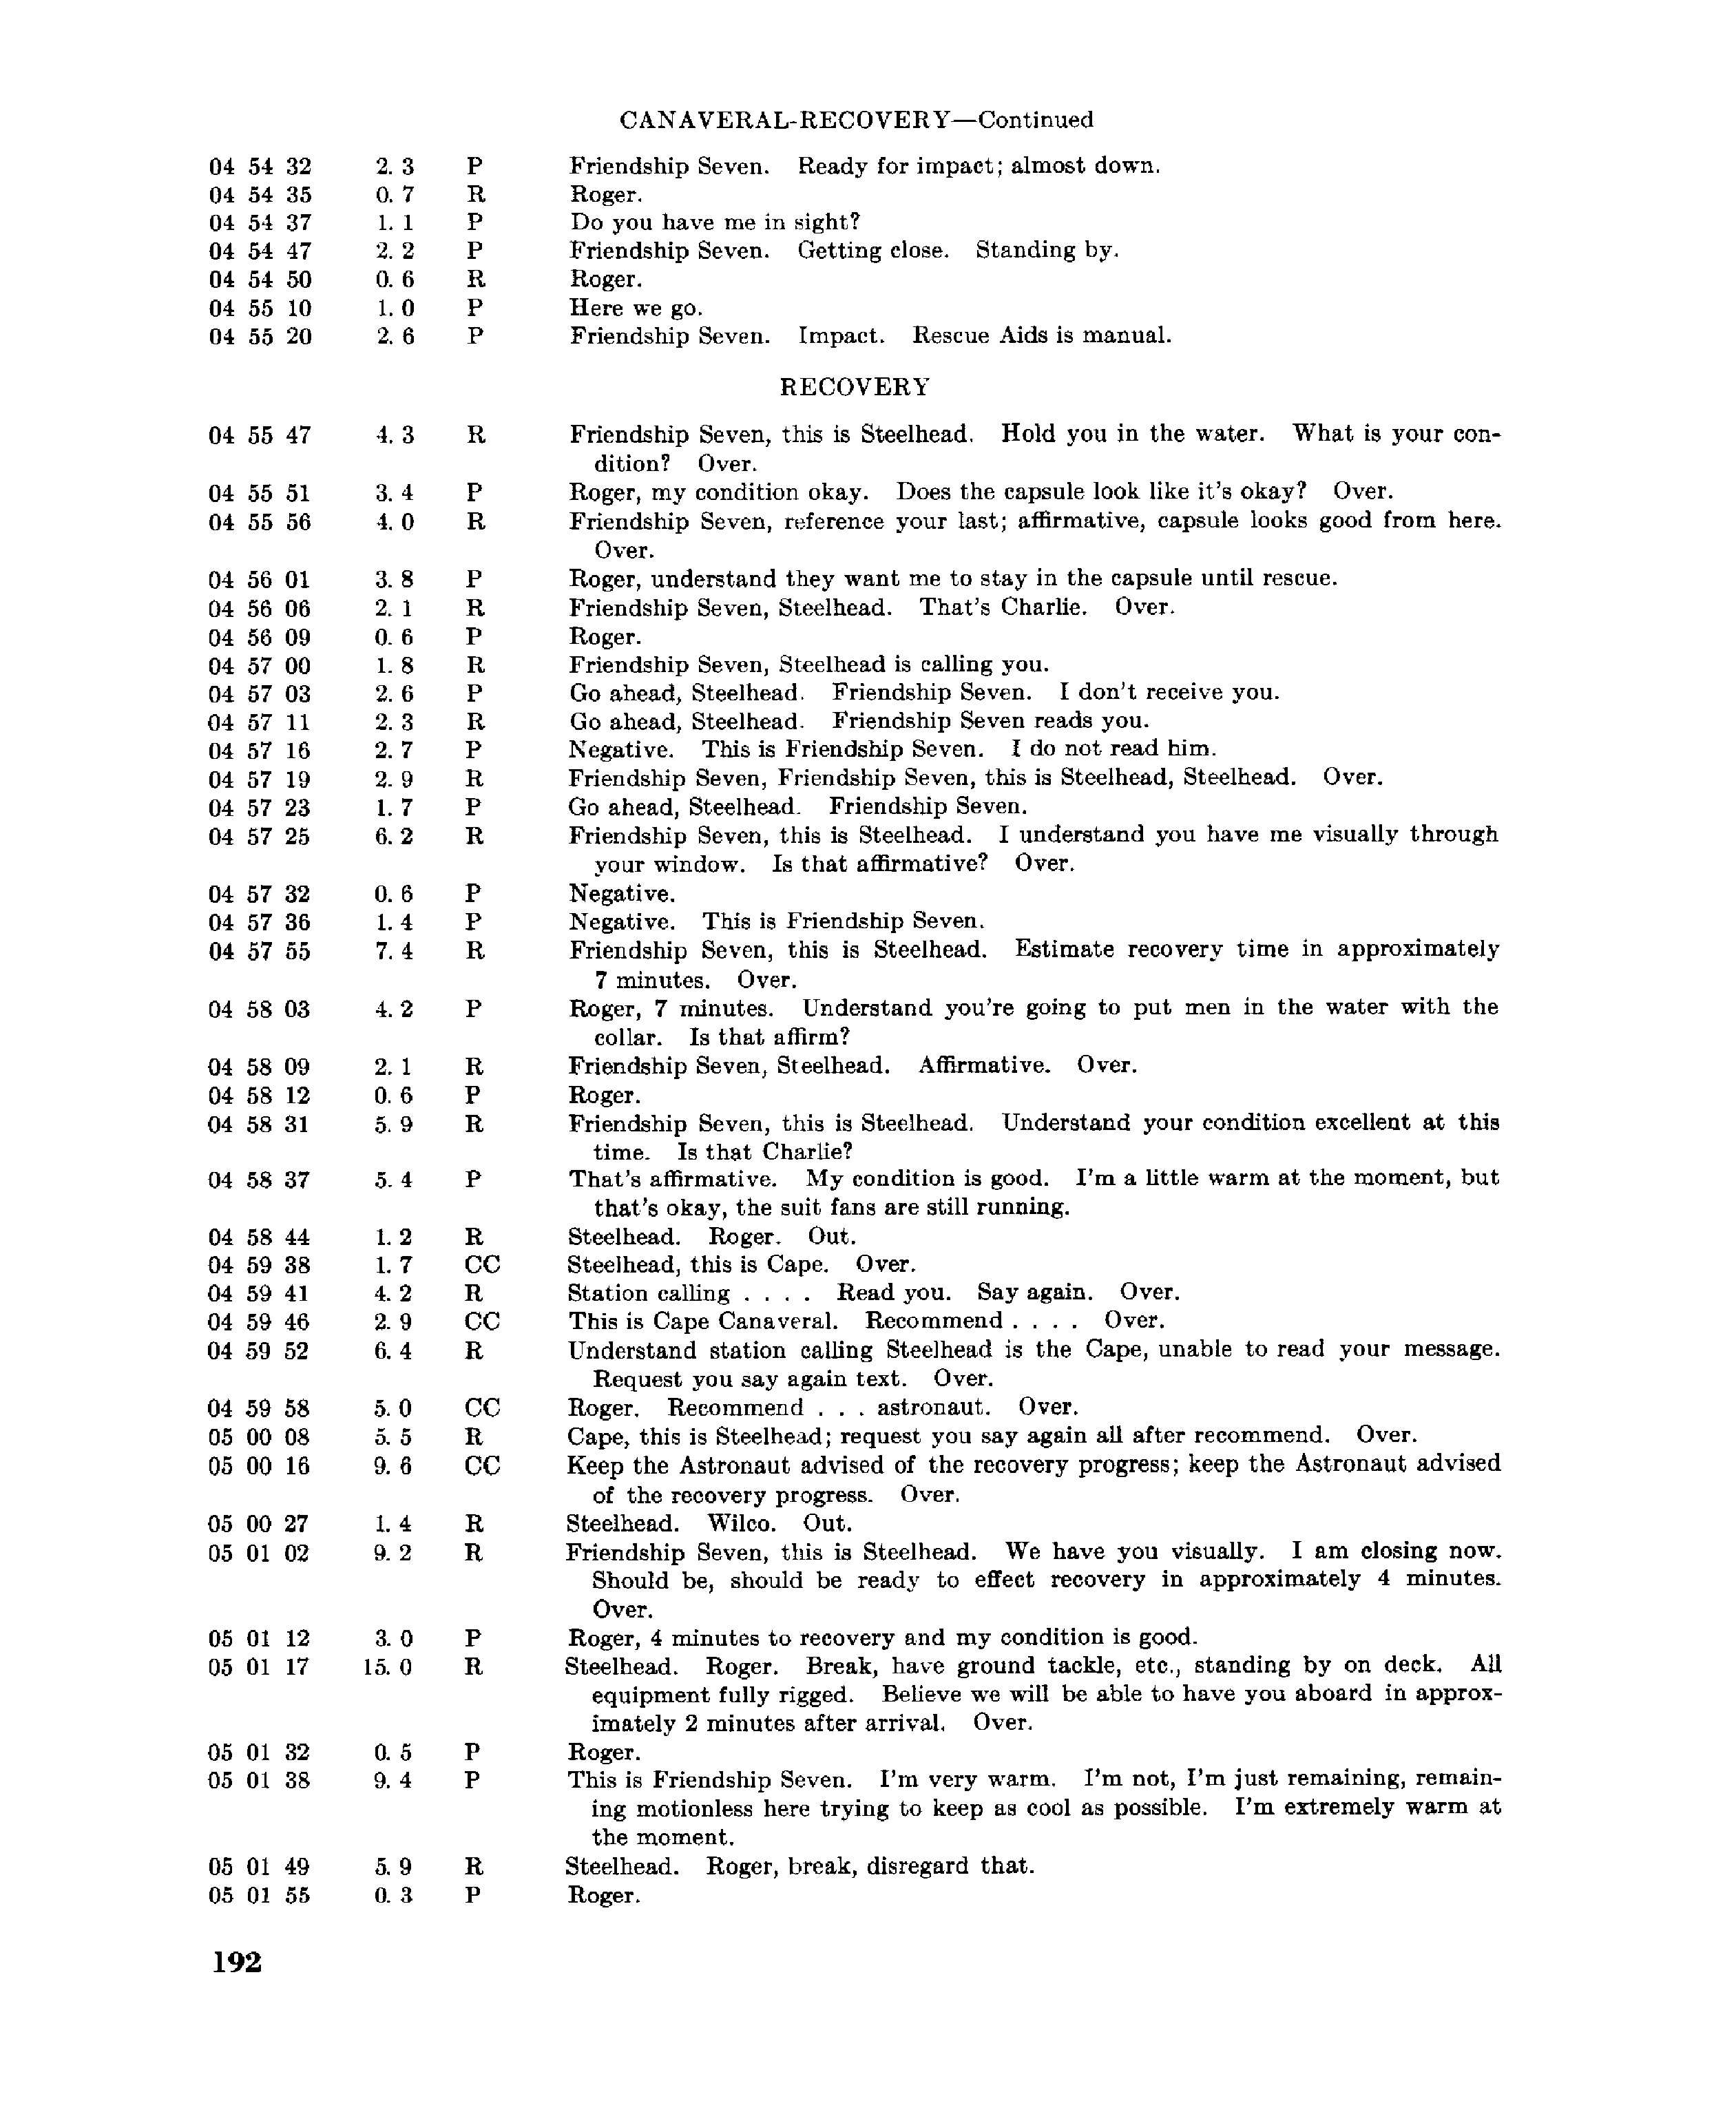 Page 191 of Mercury 6’s original transcript